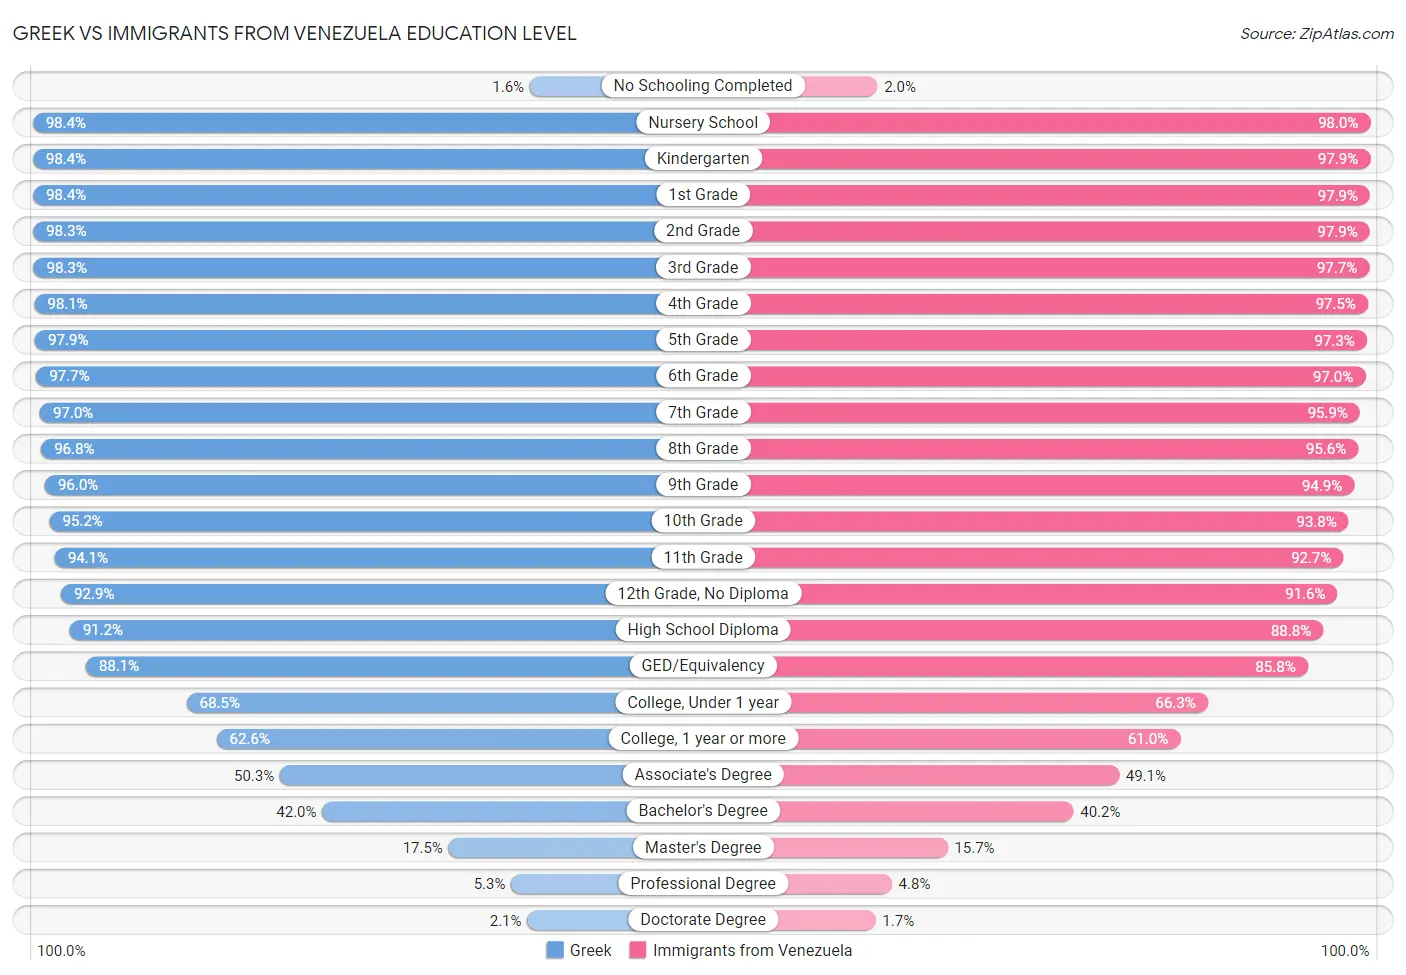 Greek vs Immigrants from Venezuela Education Level